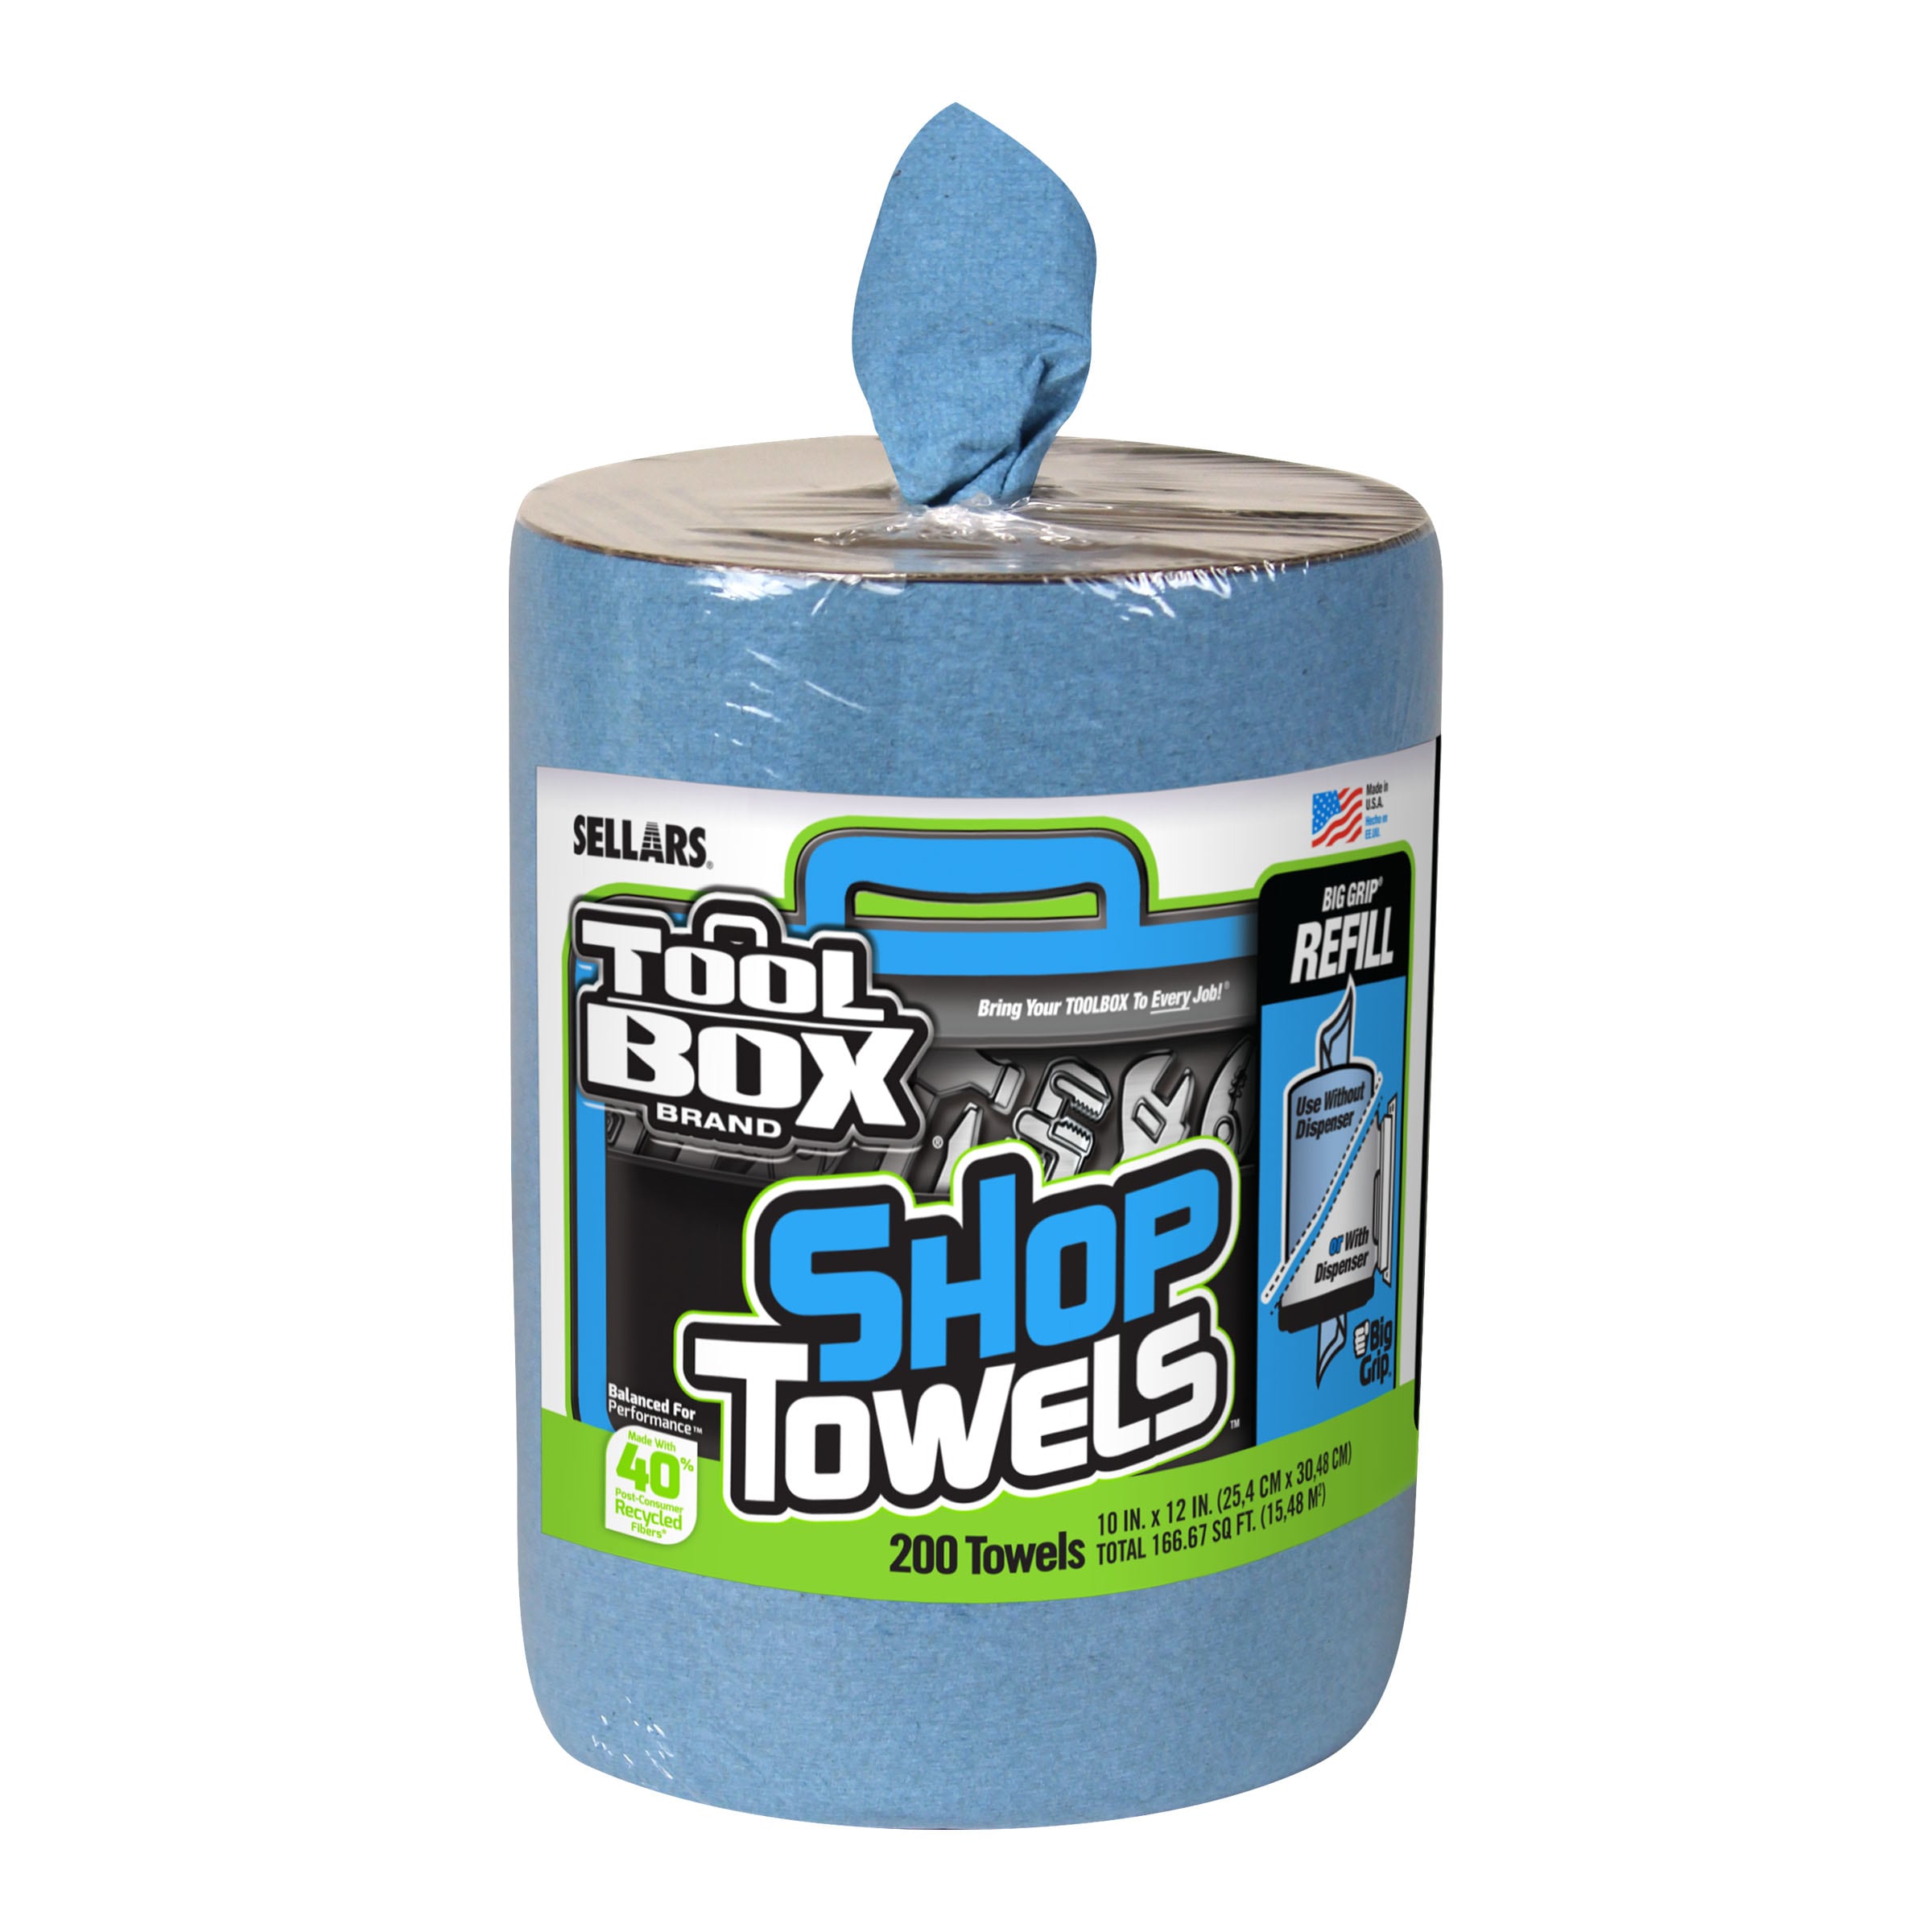 Unique Bargains Dishwashing Cleaning Microfiber Thick Absorbent Kitchen  Towels 12 X 12 6 Pcs Blue : Target